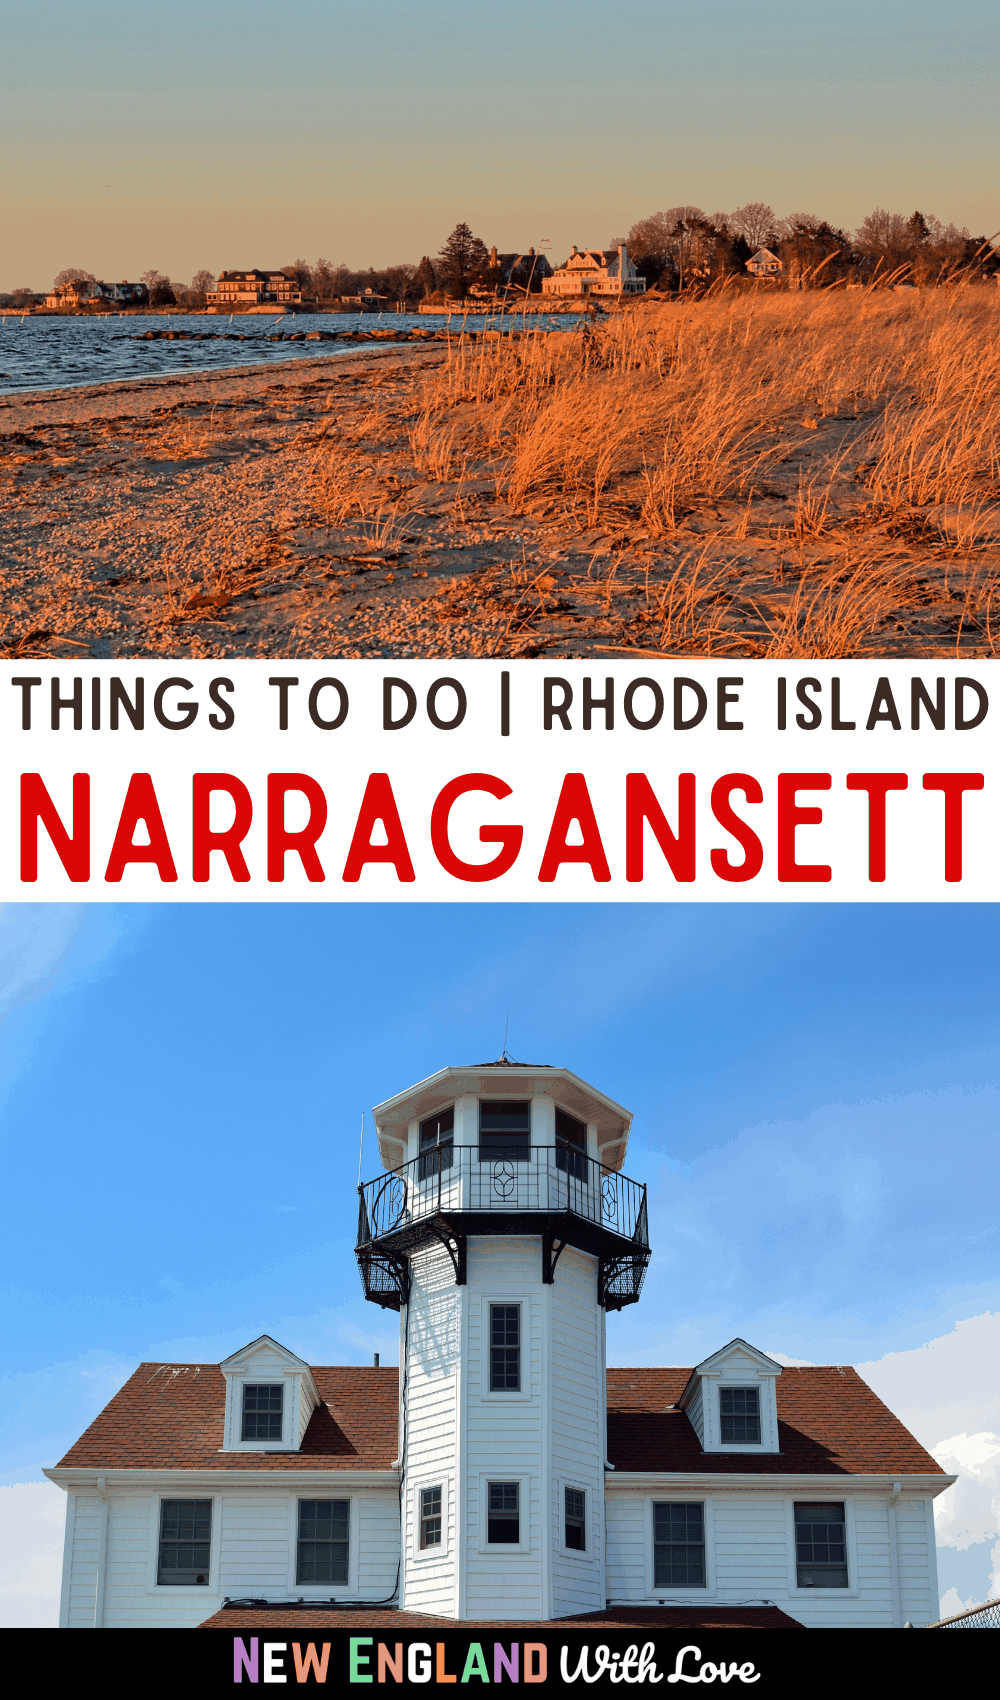 Pinterest graphic reading "THINGS TO DO RHODE ISLAND NARRAGENSETT"